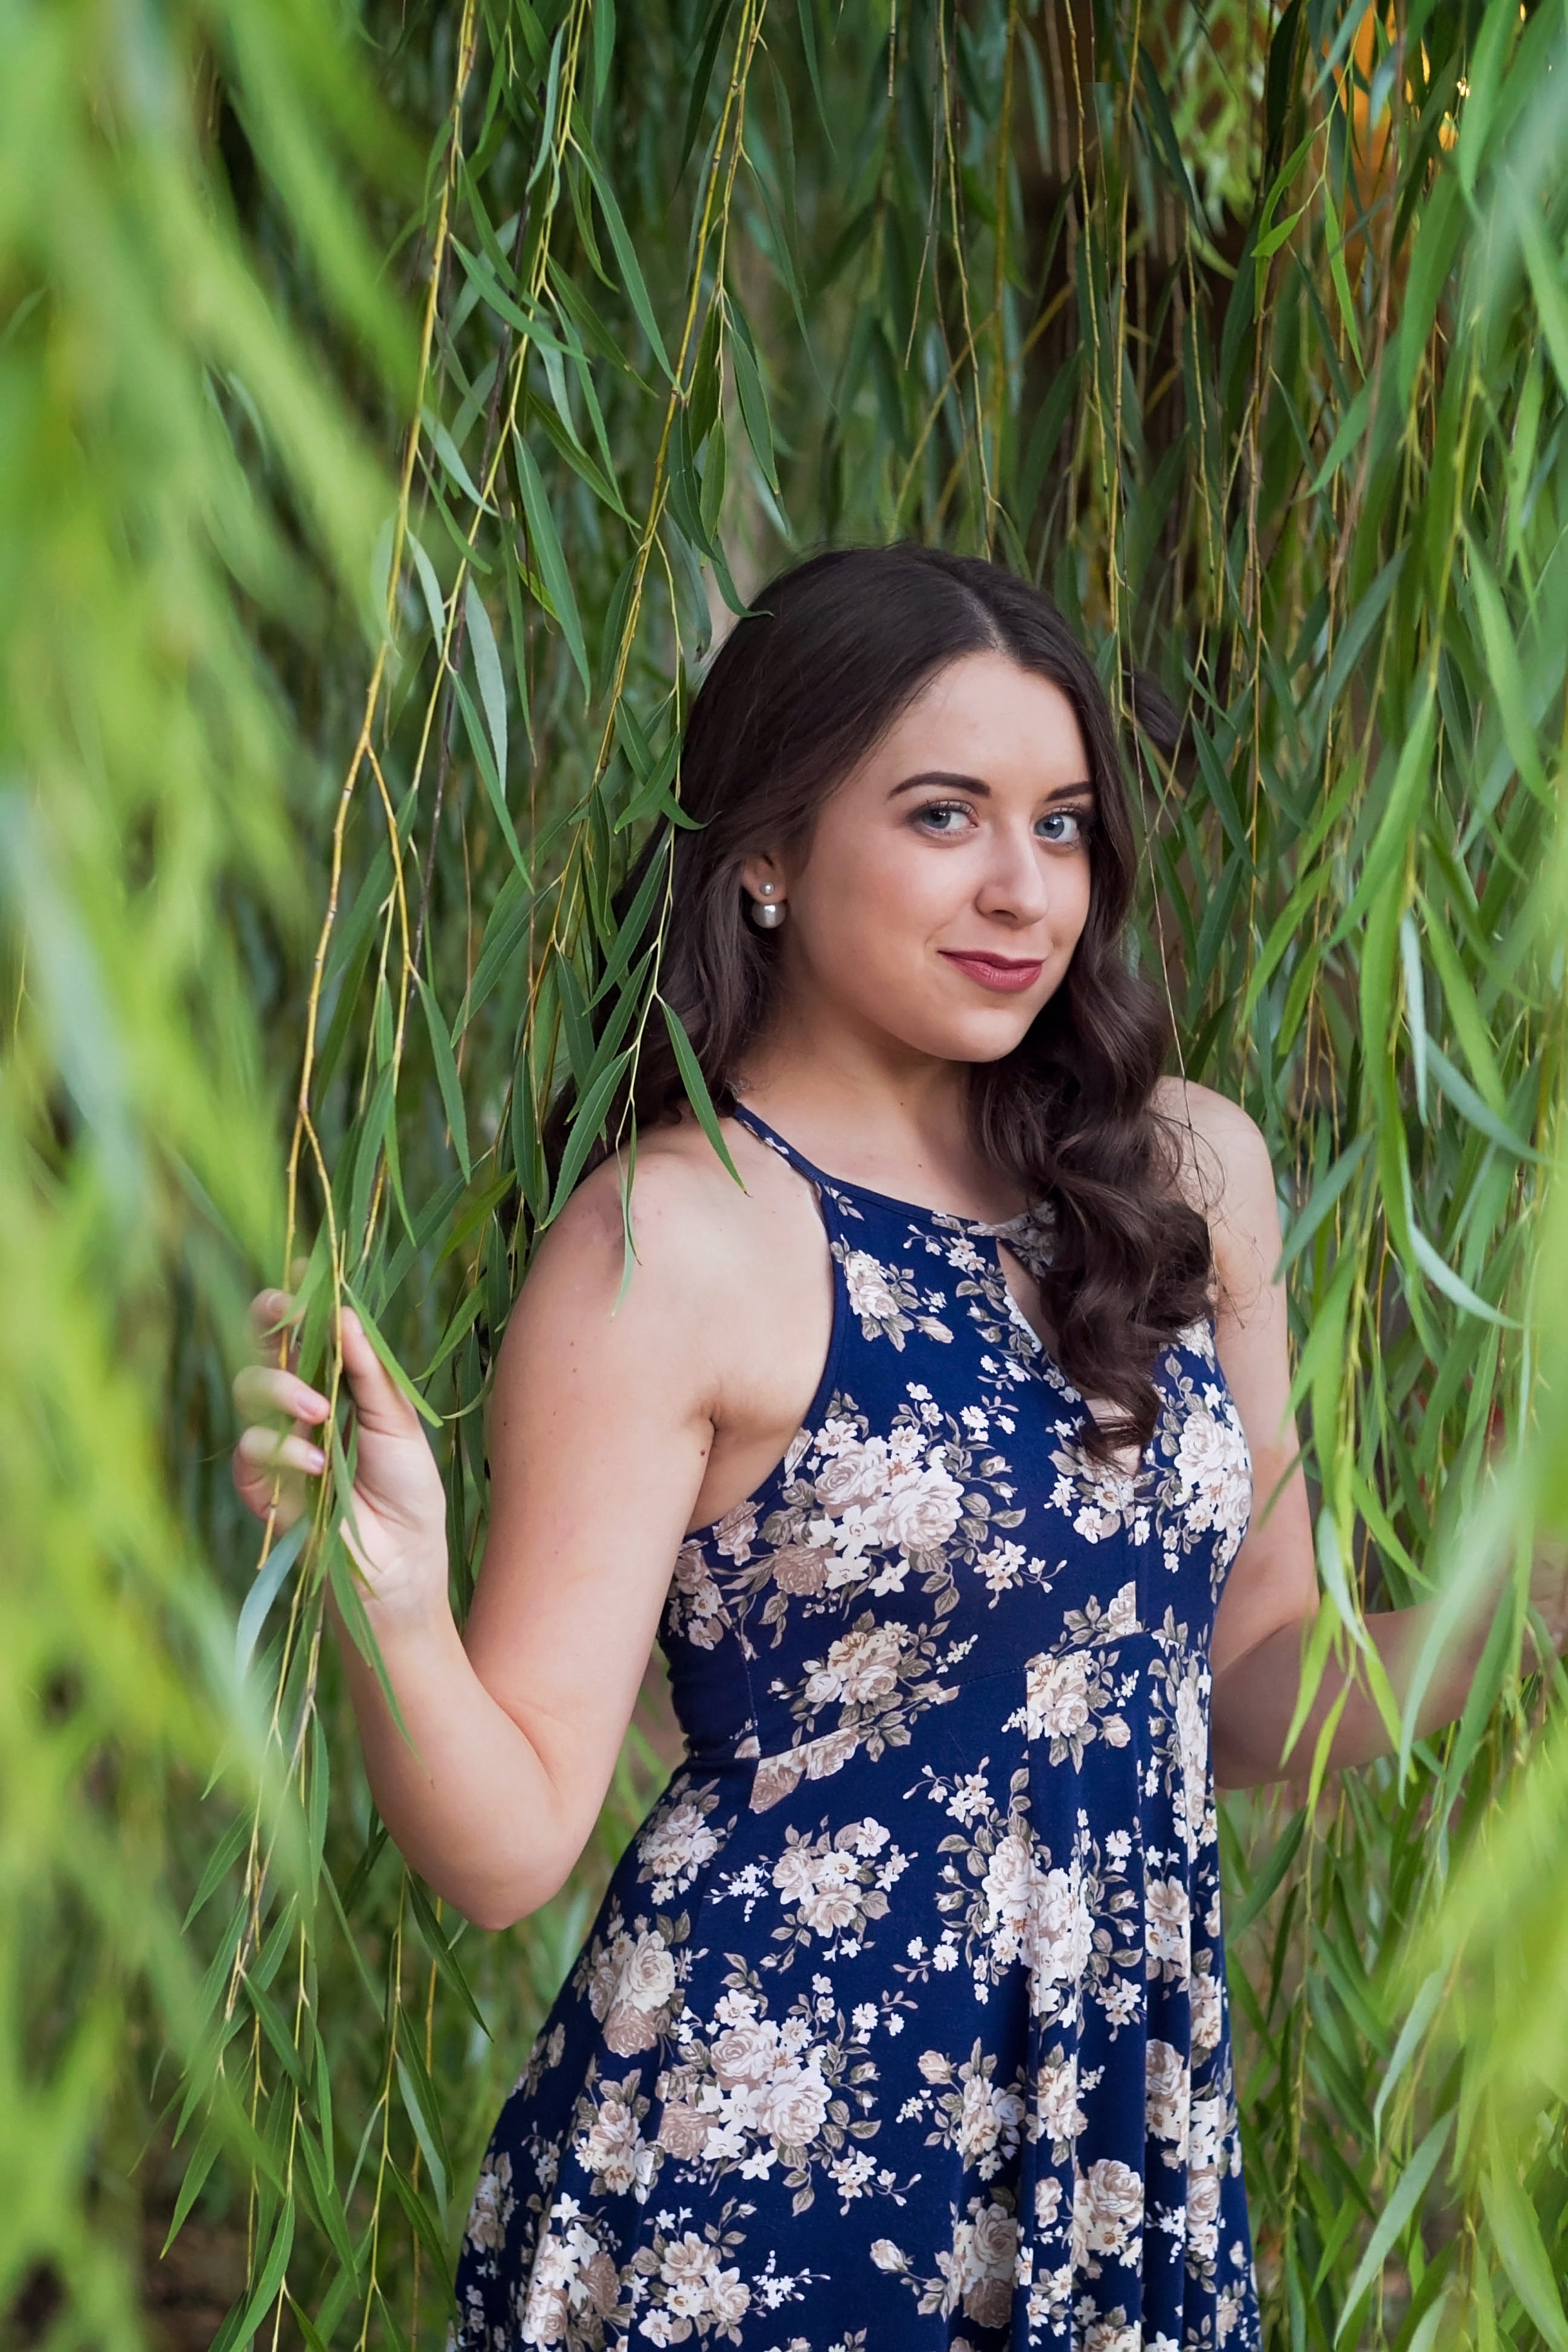 Senior Girl in Blue dress standing in a willow.jpg